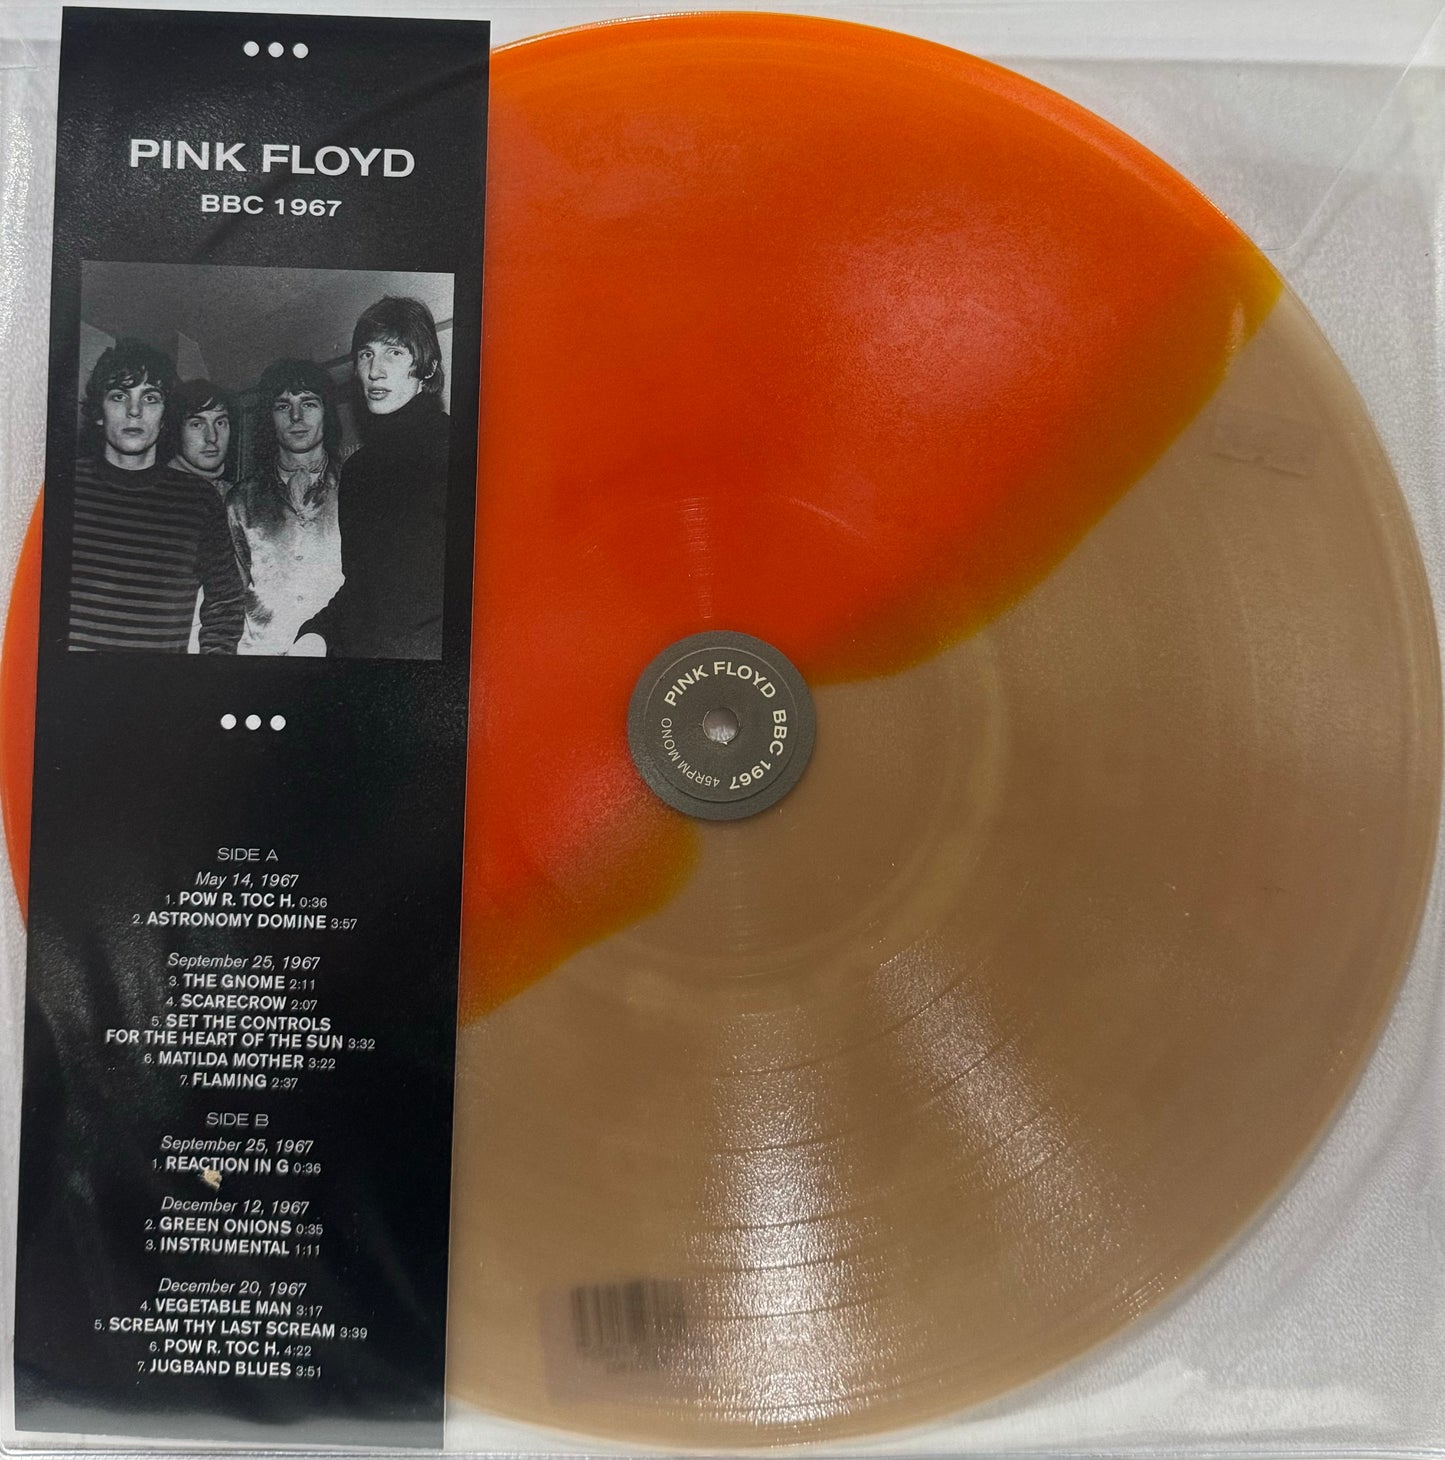 PINK FLOYD - BBC 1967  LP